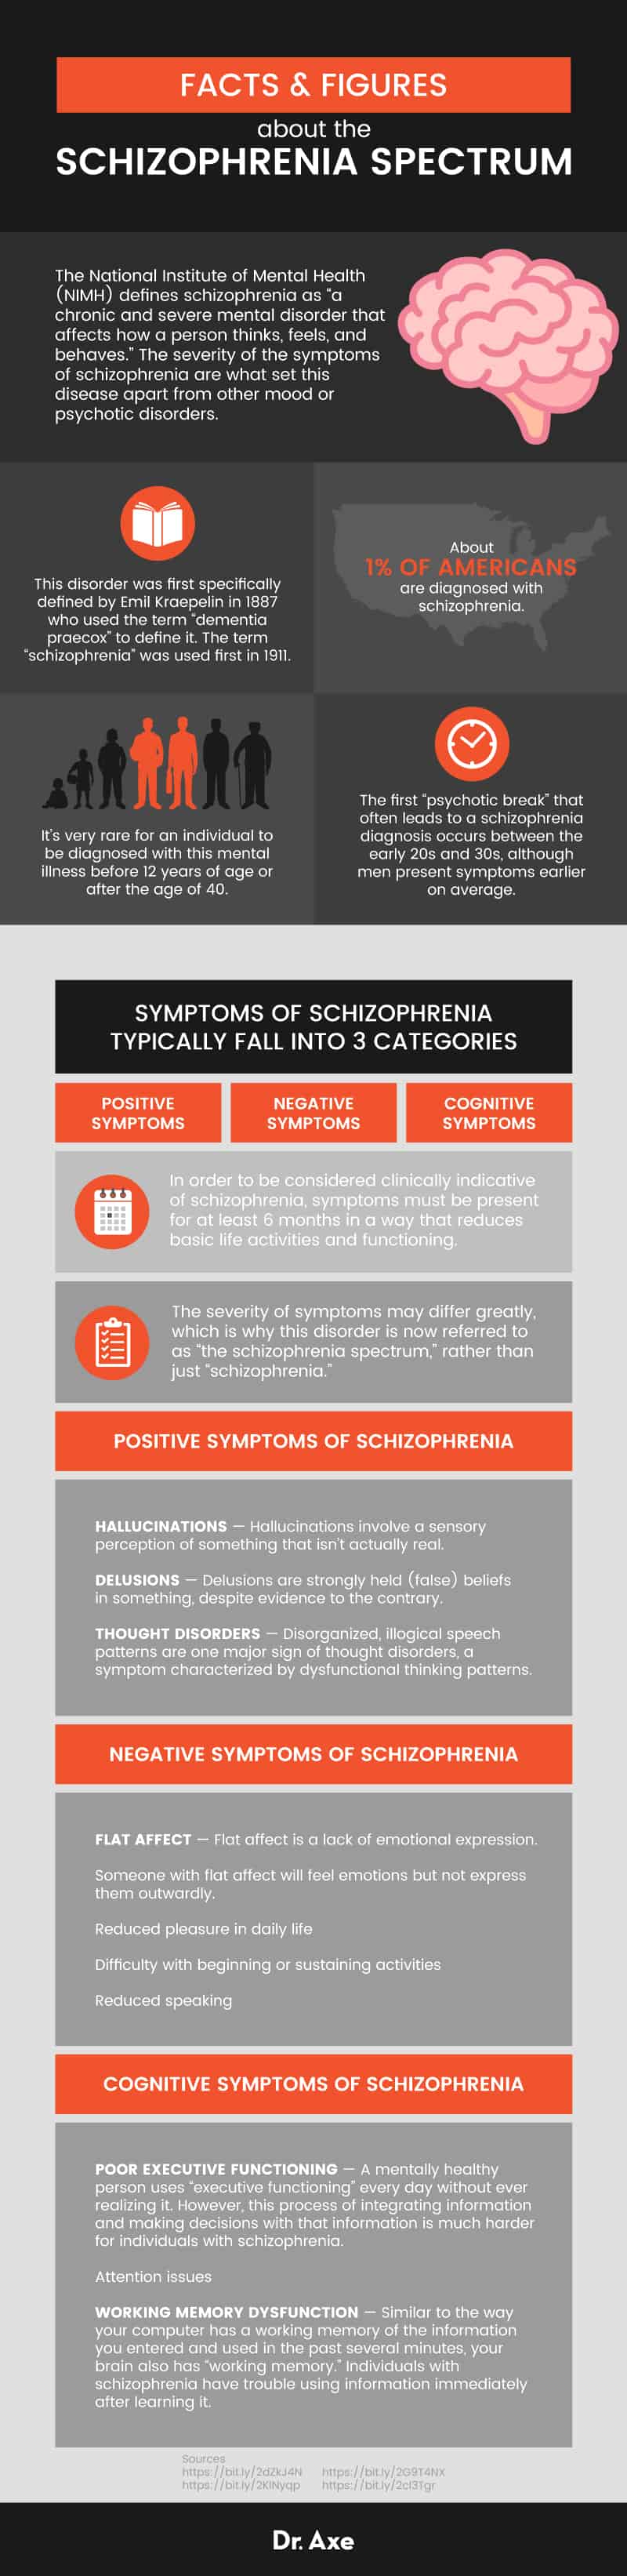 Symptoms of schizophrenia - Dr. Axe